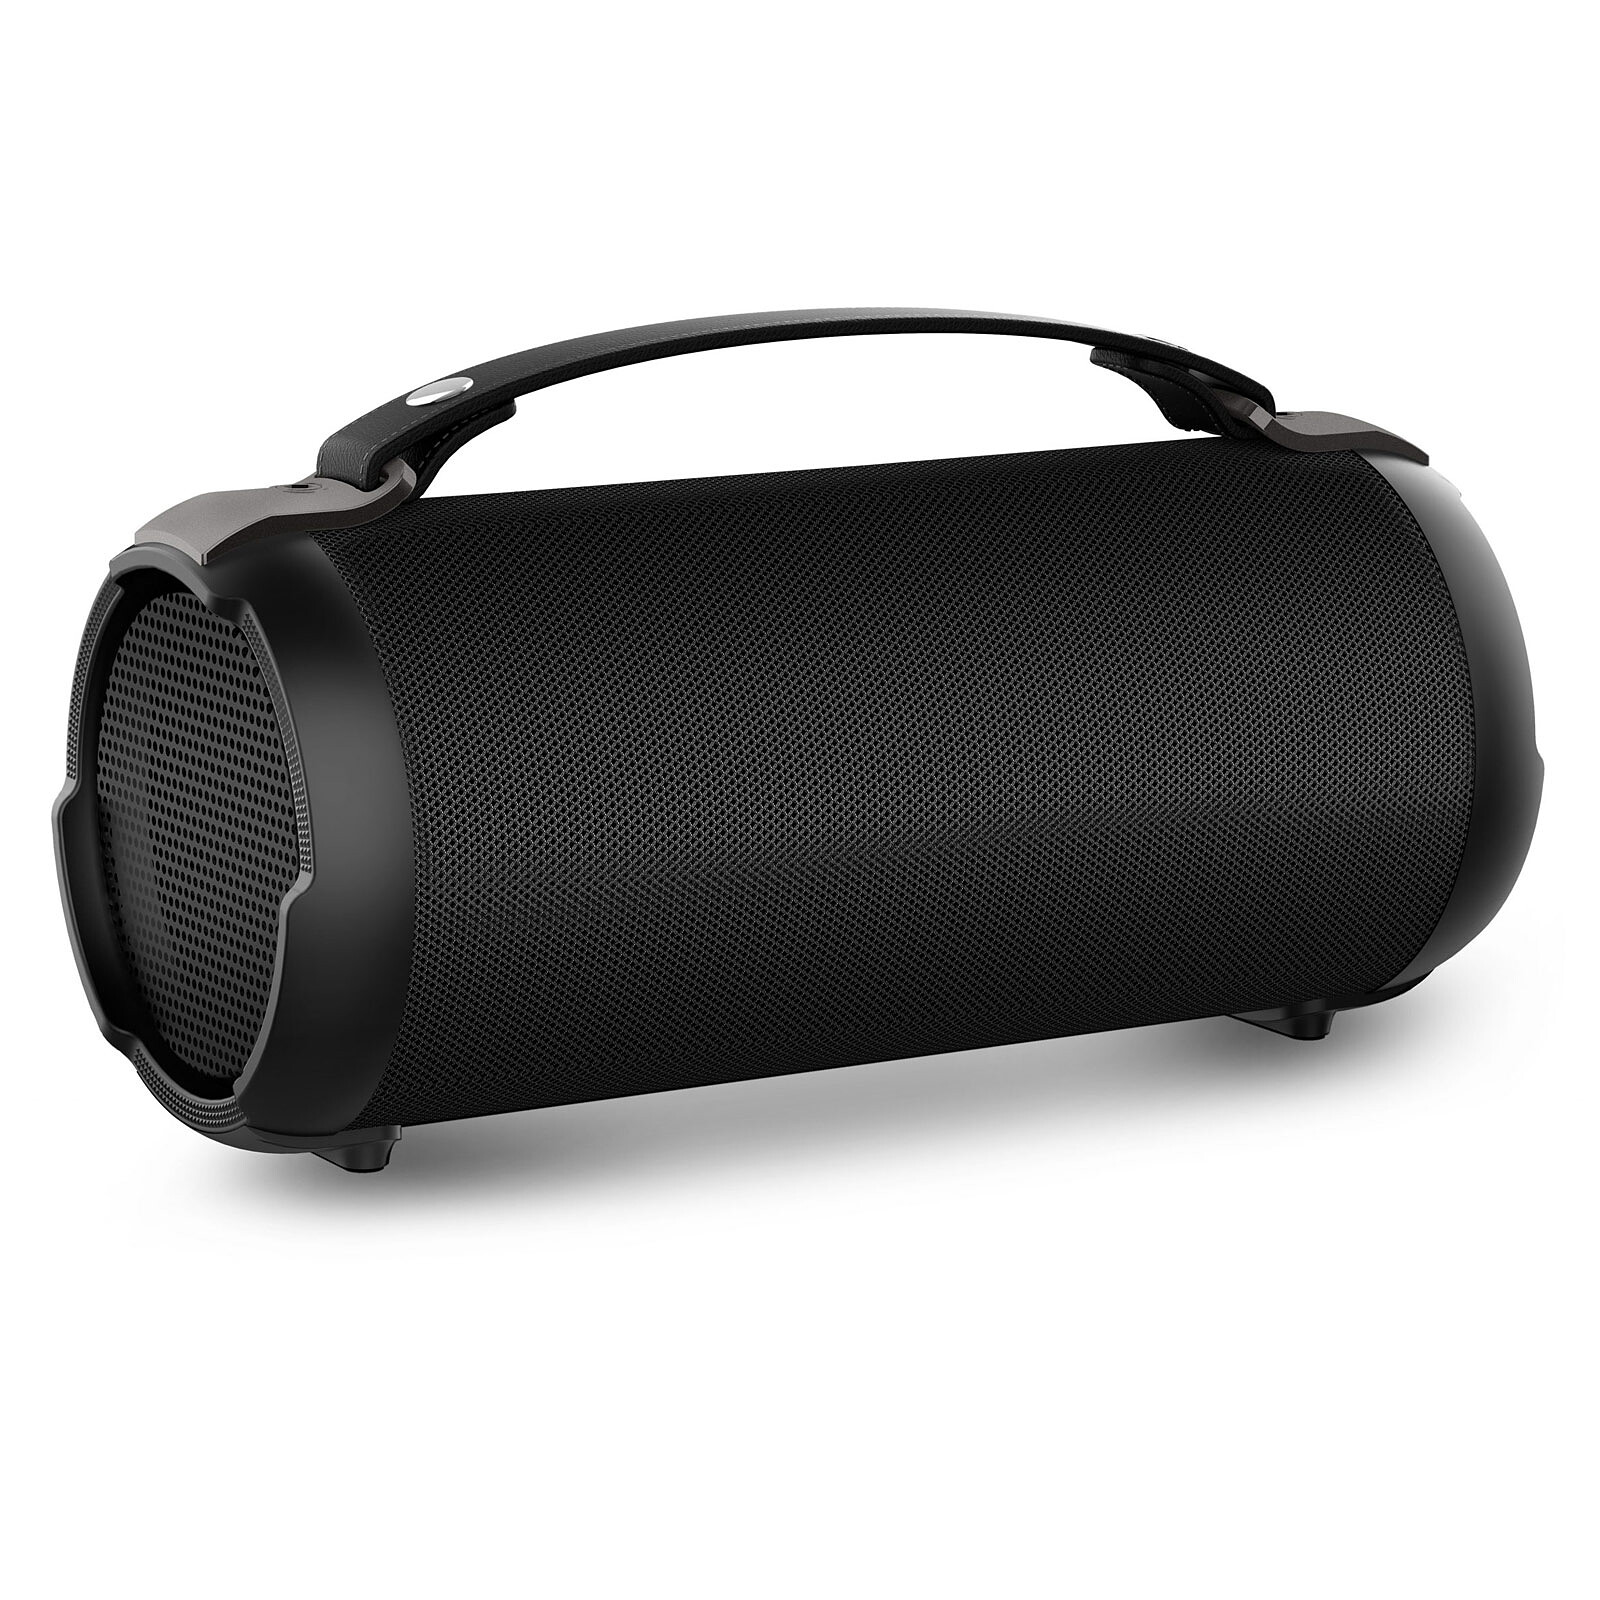 Caliber HPG340BT - Bluetooth speaker - LDLC 3-year warranty